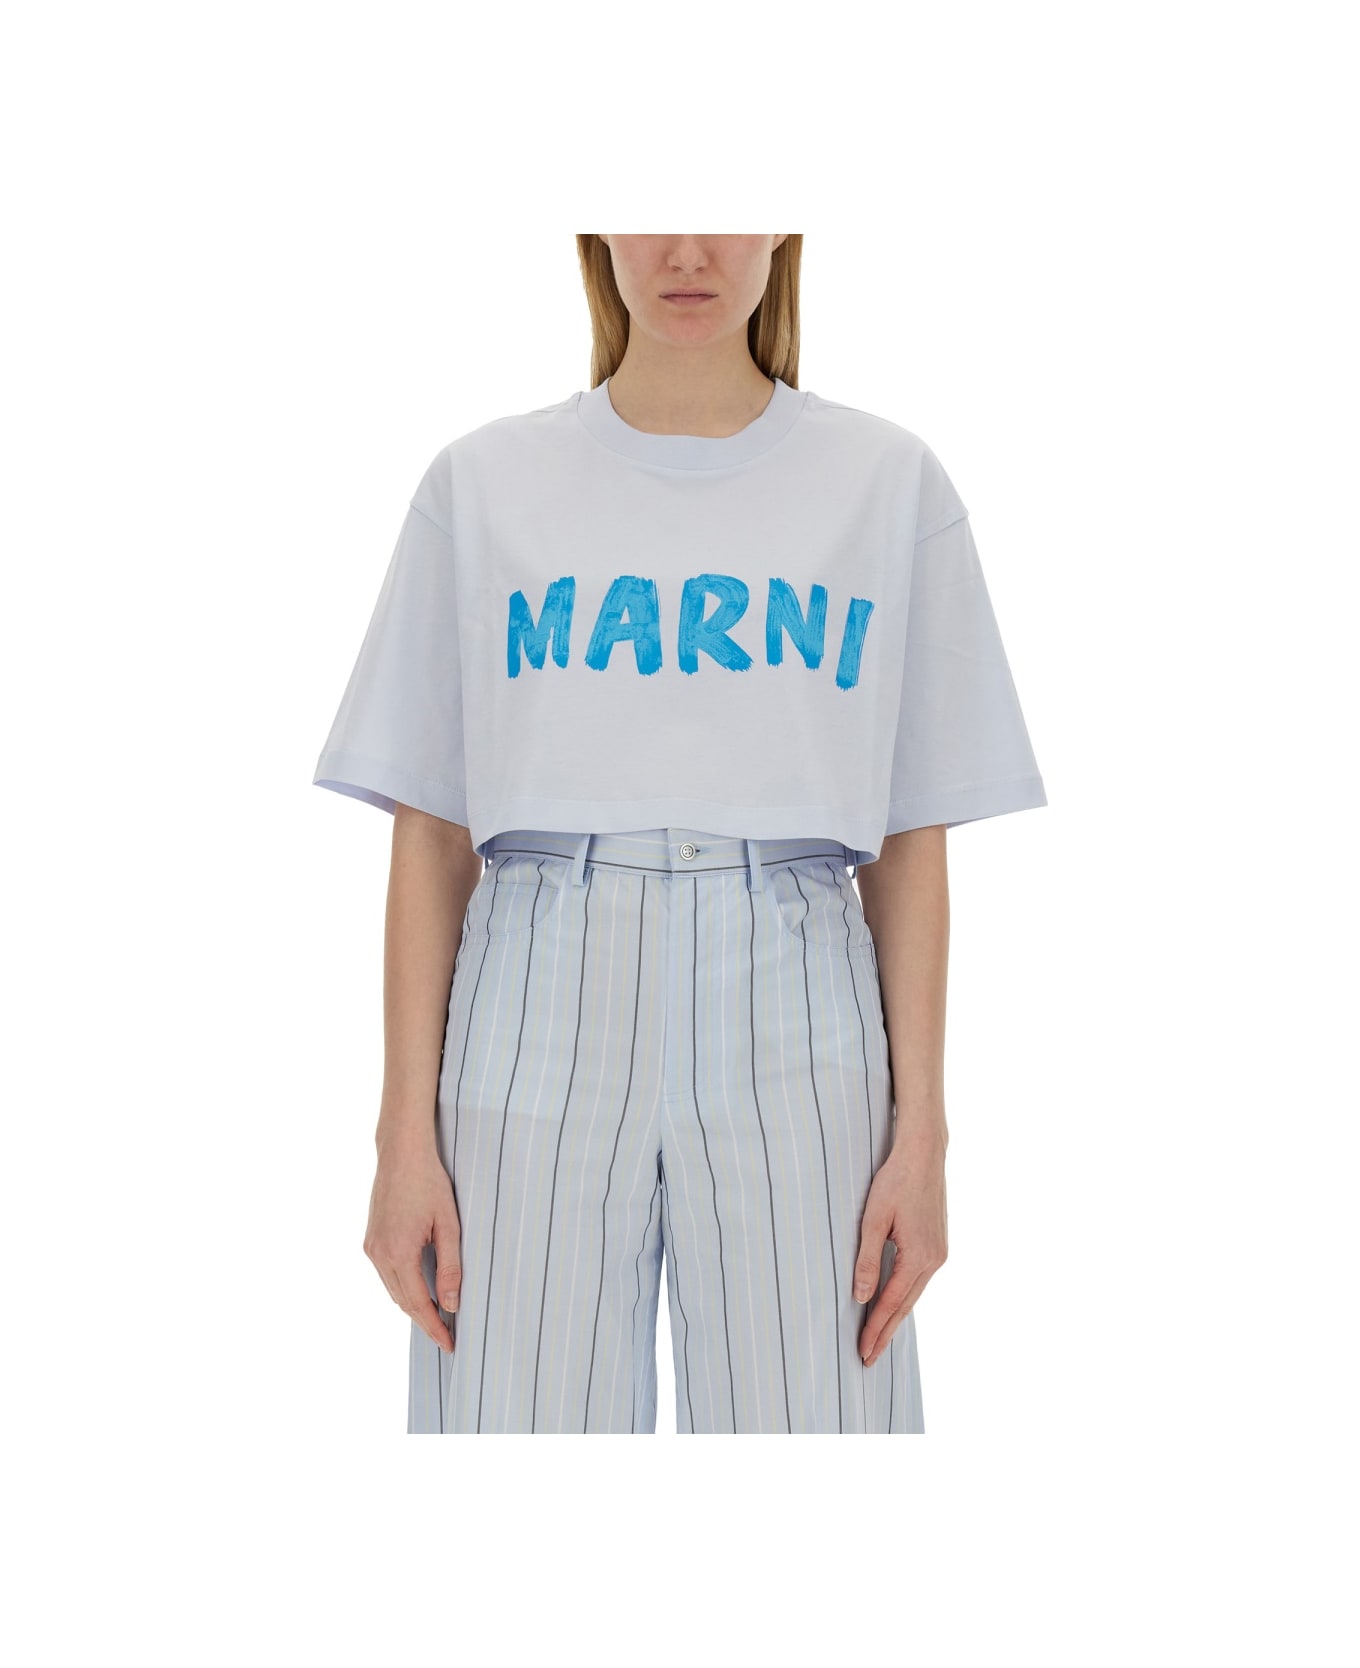 Marni Logo Print T-shirt - BABY BLUE